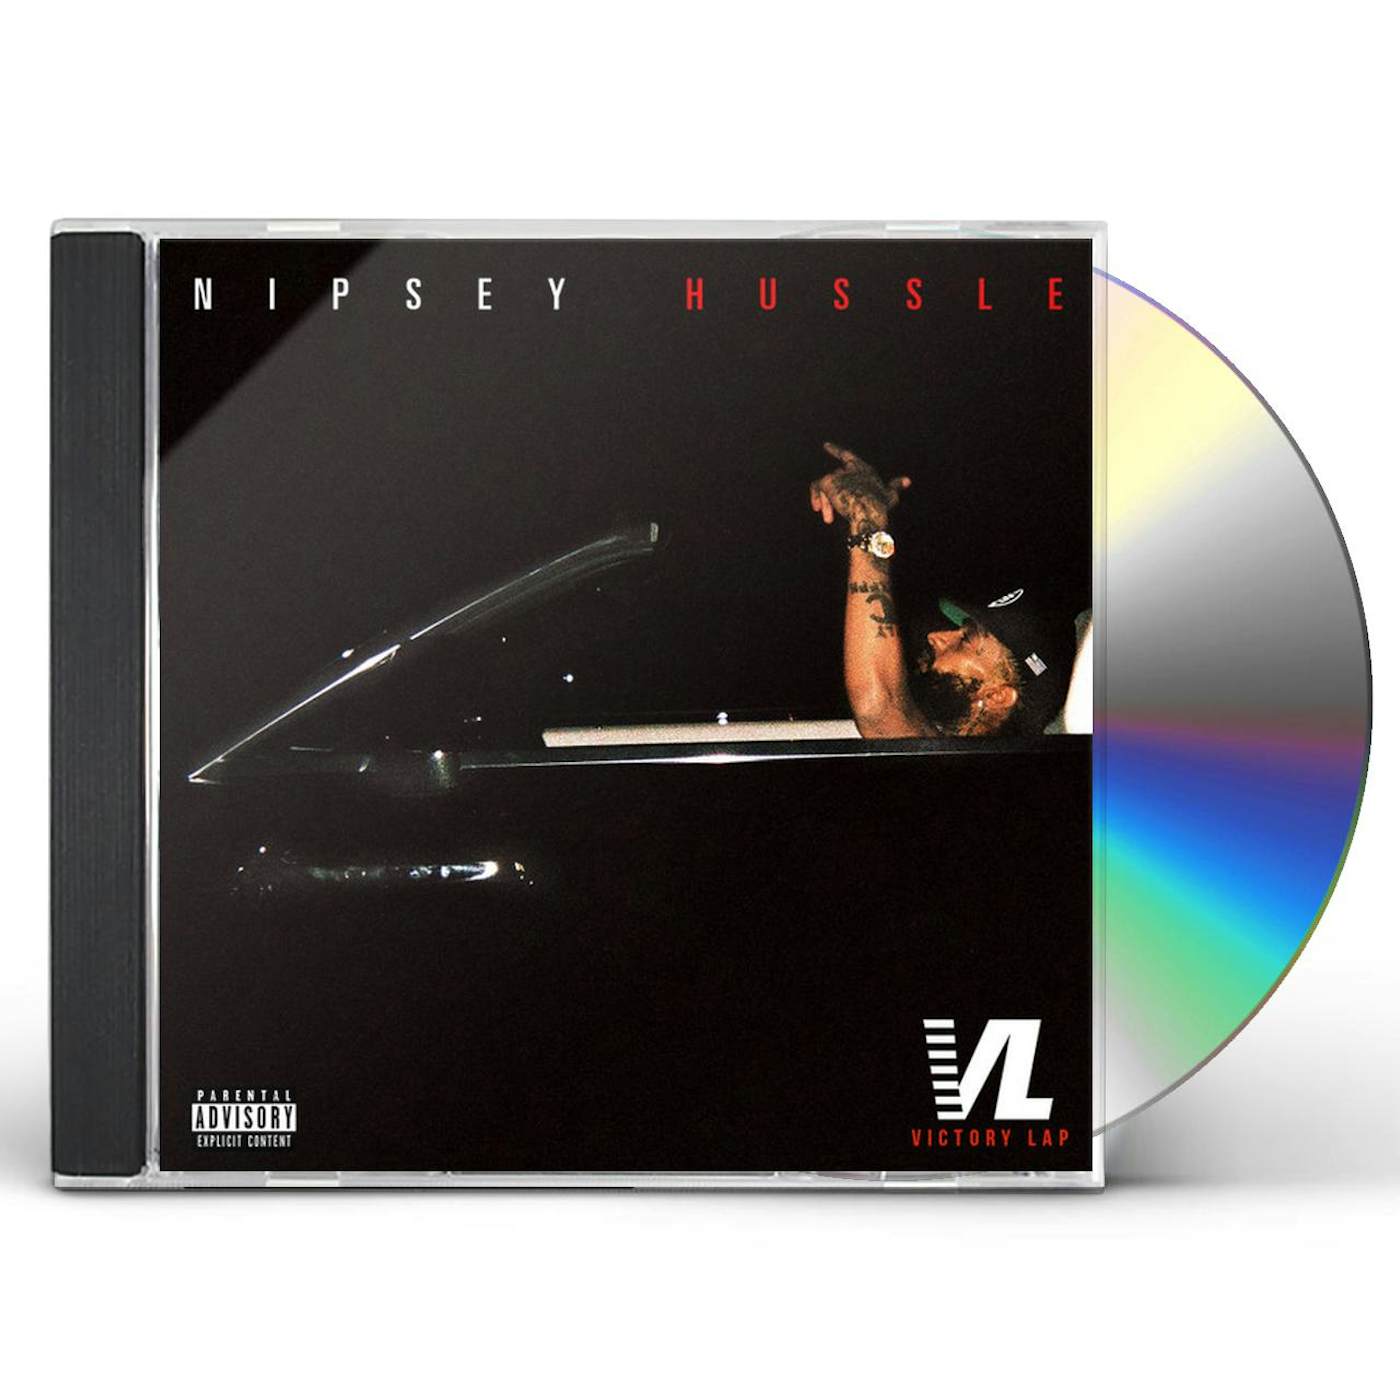 Nipsey Hussle VICTORY LAP (X) CD